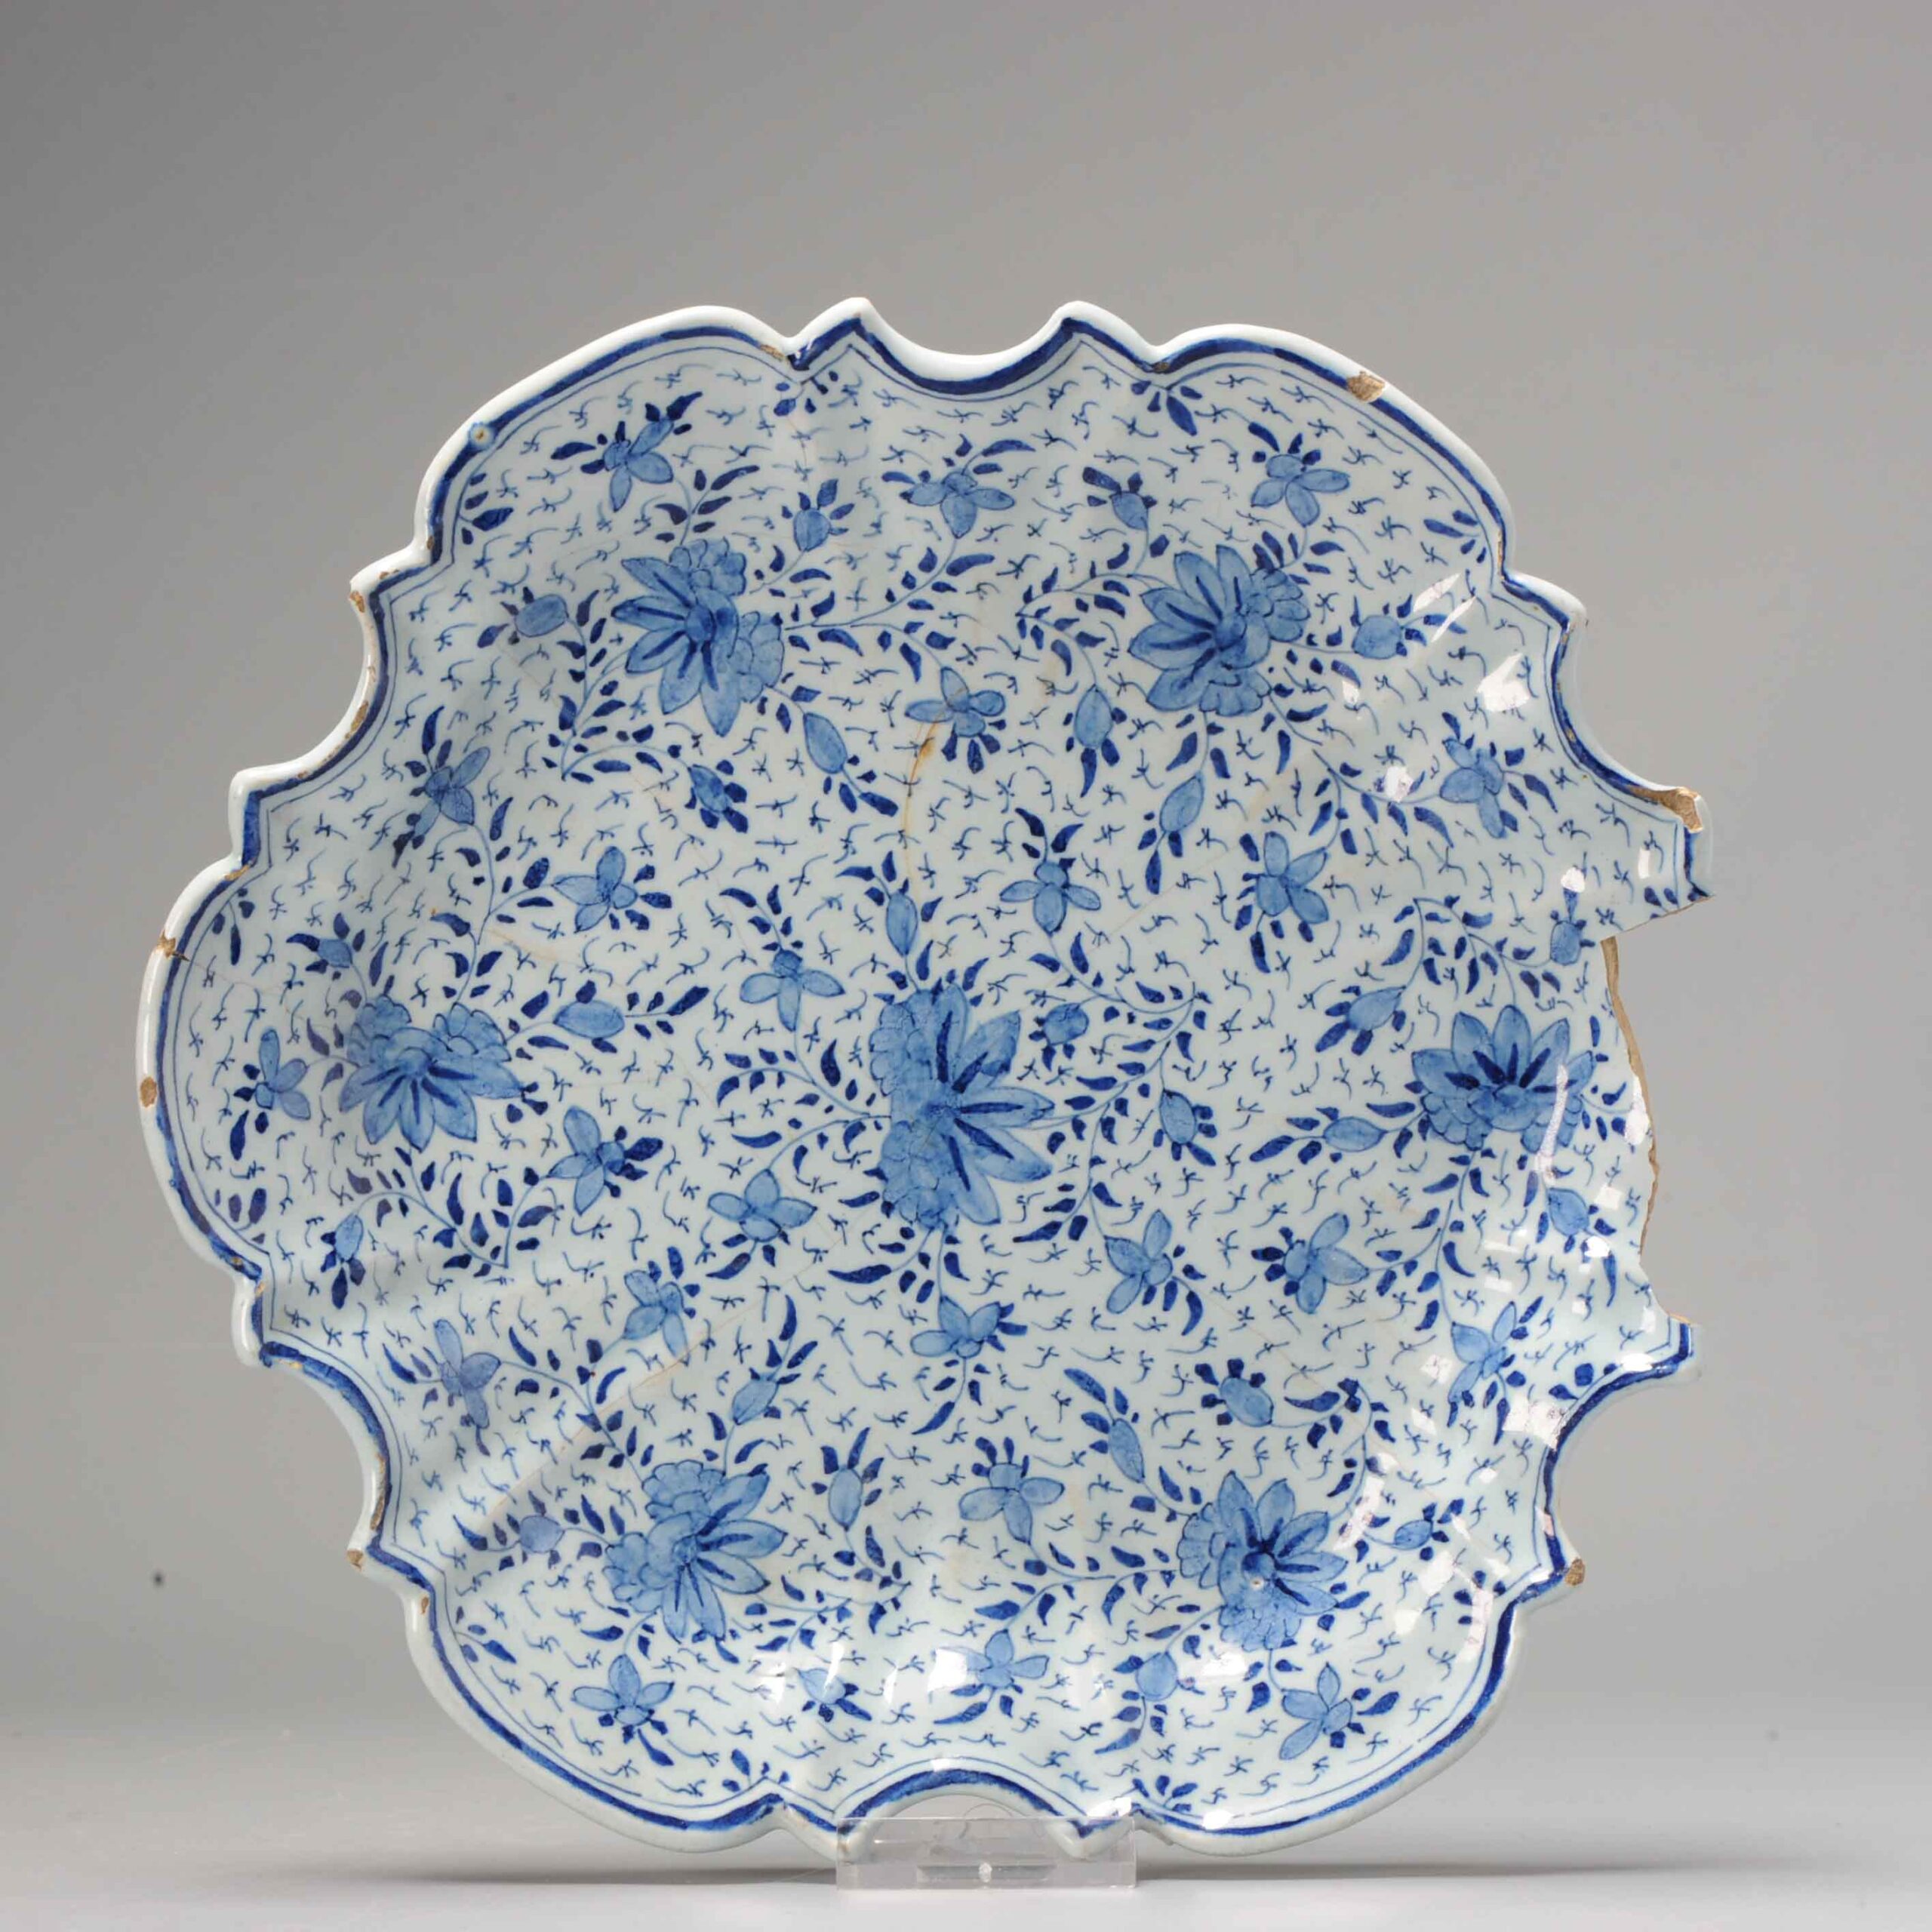 Antique 18th c Blue and White Lobed Dutch Delftware Plate.